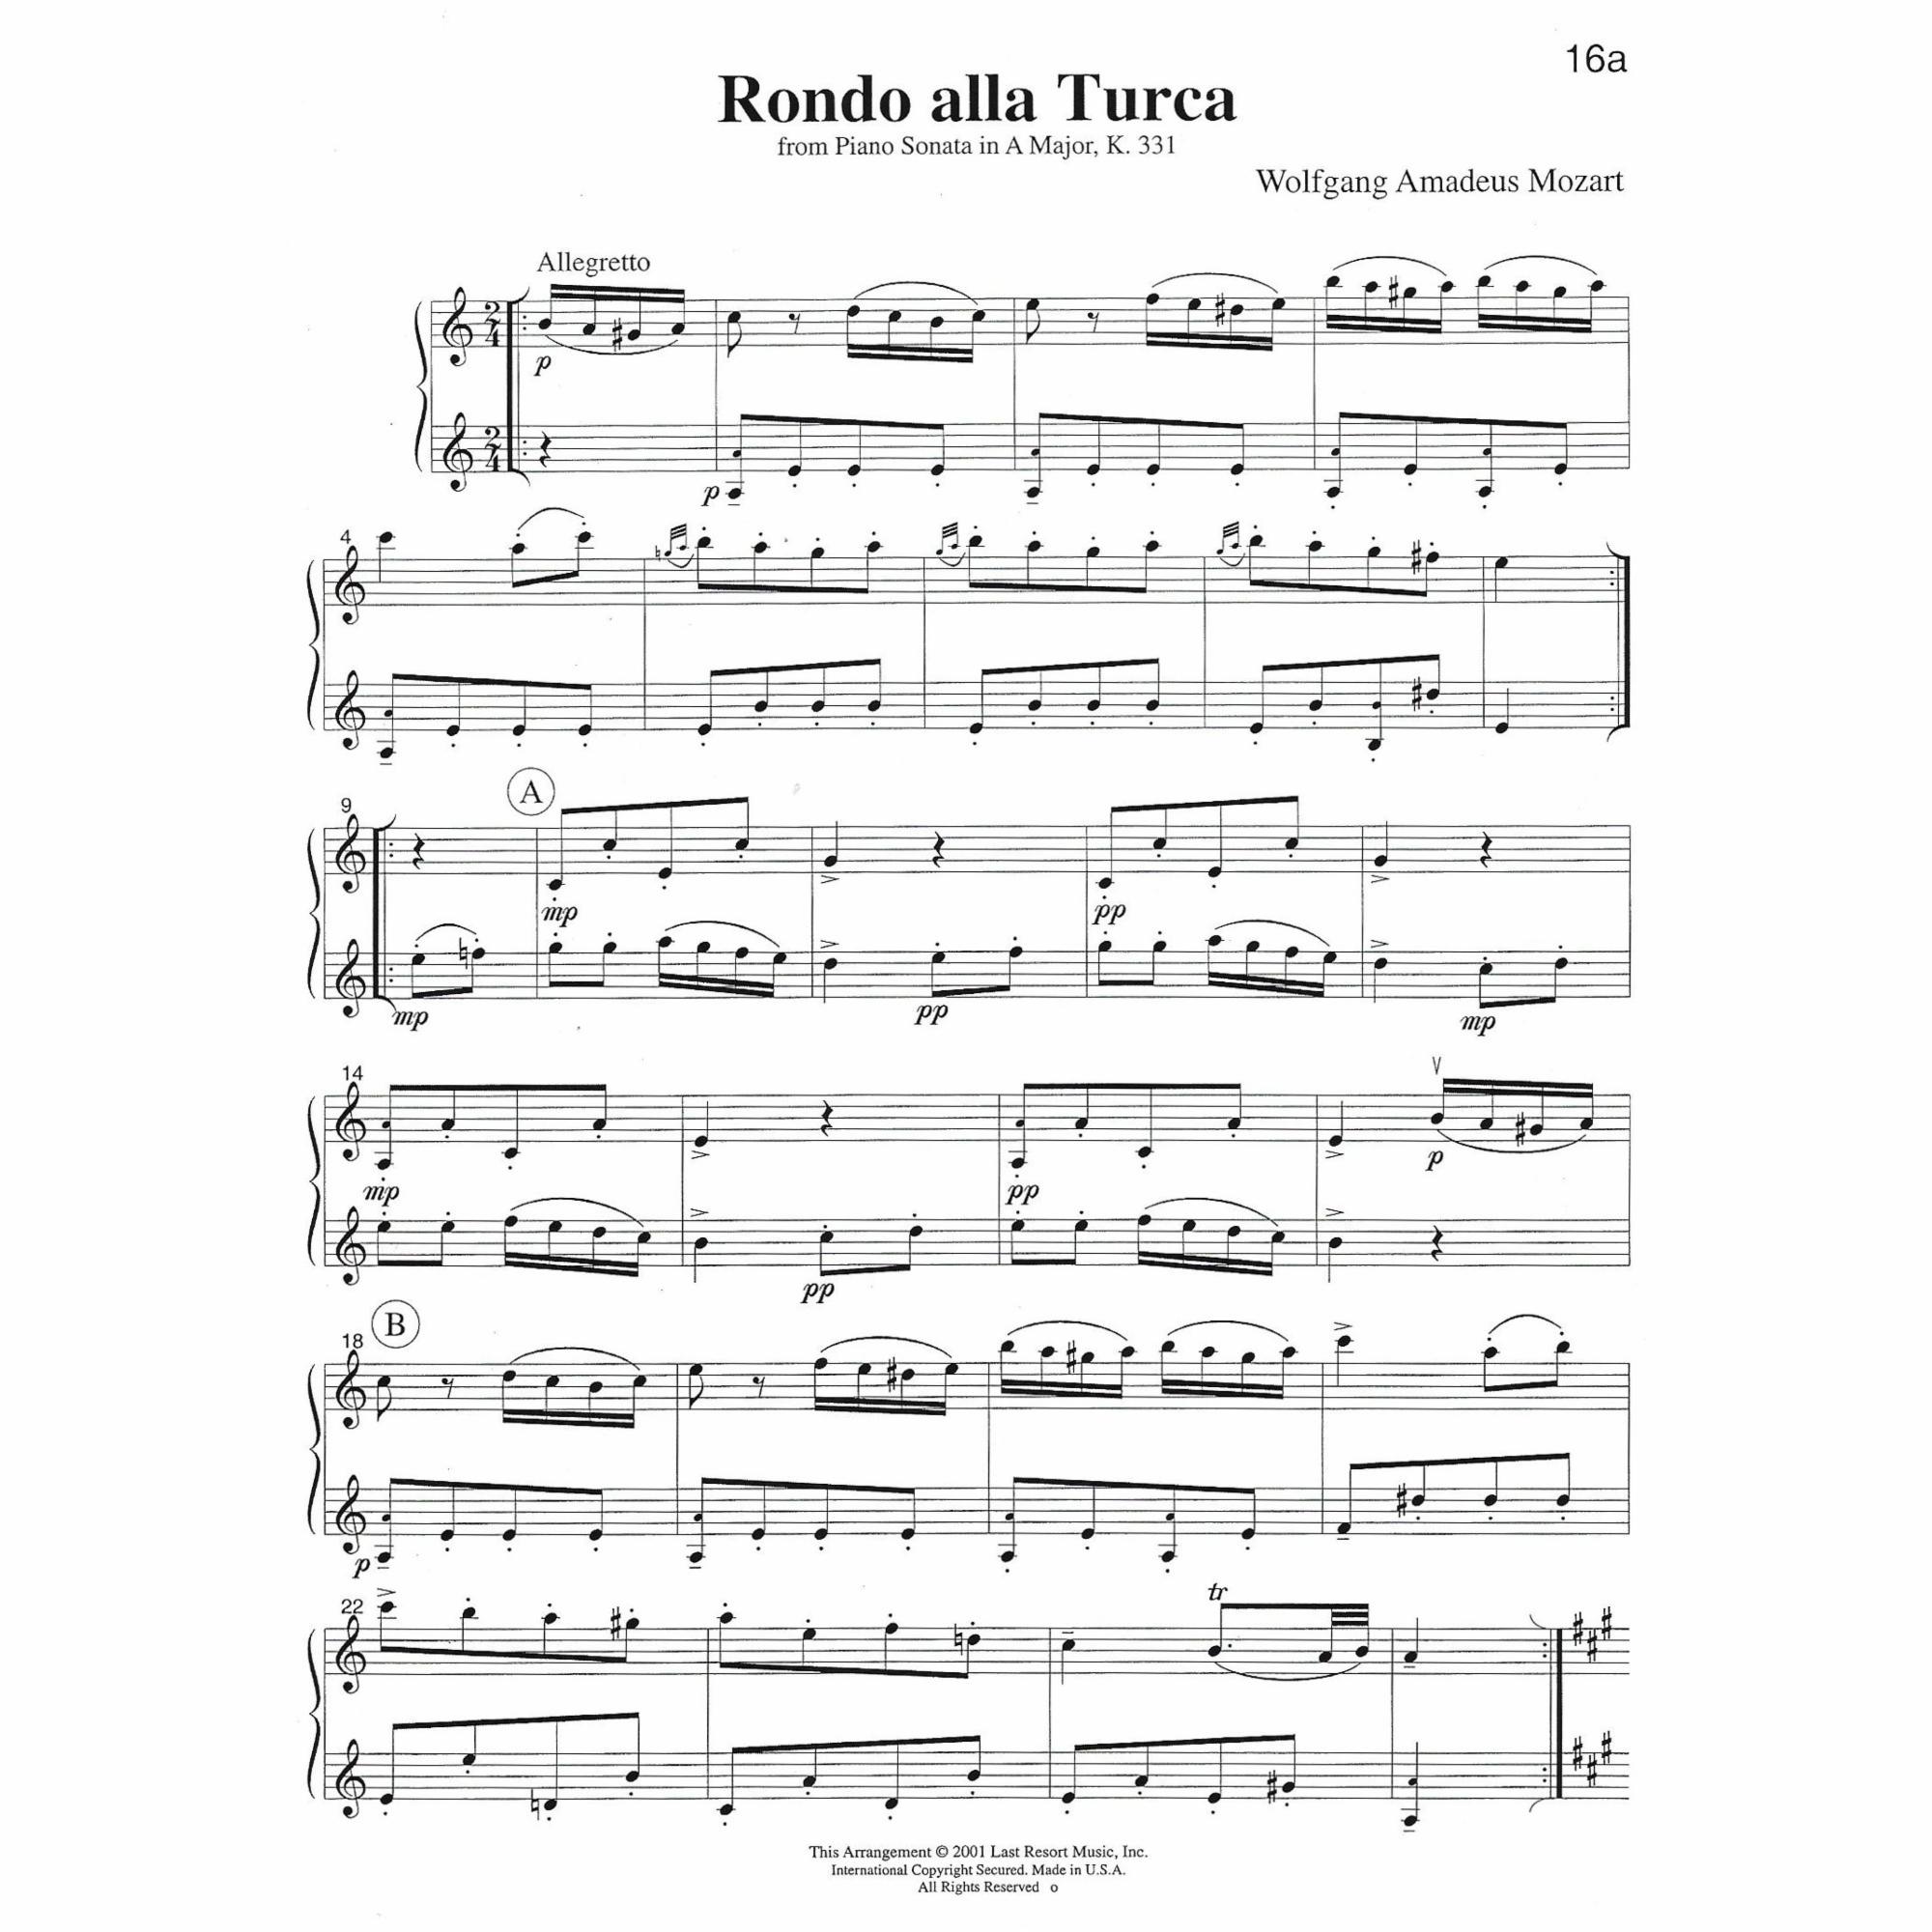 Sample: Two Violins (Pg. 16a)